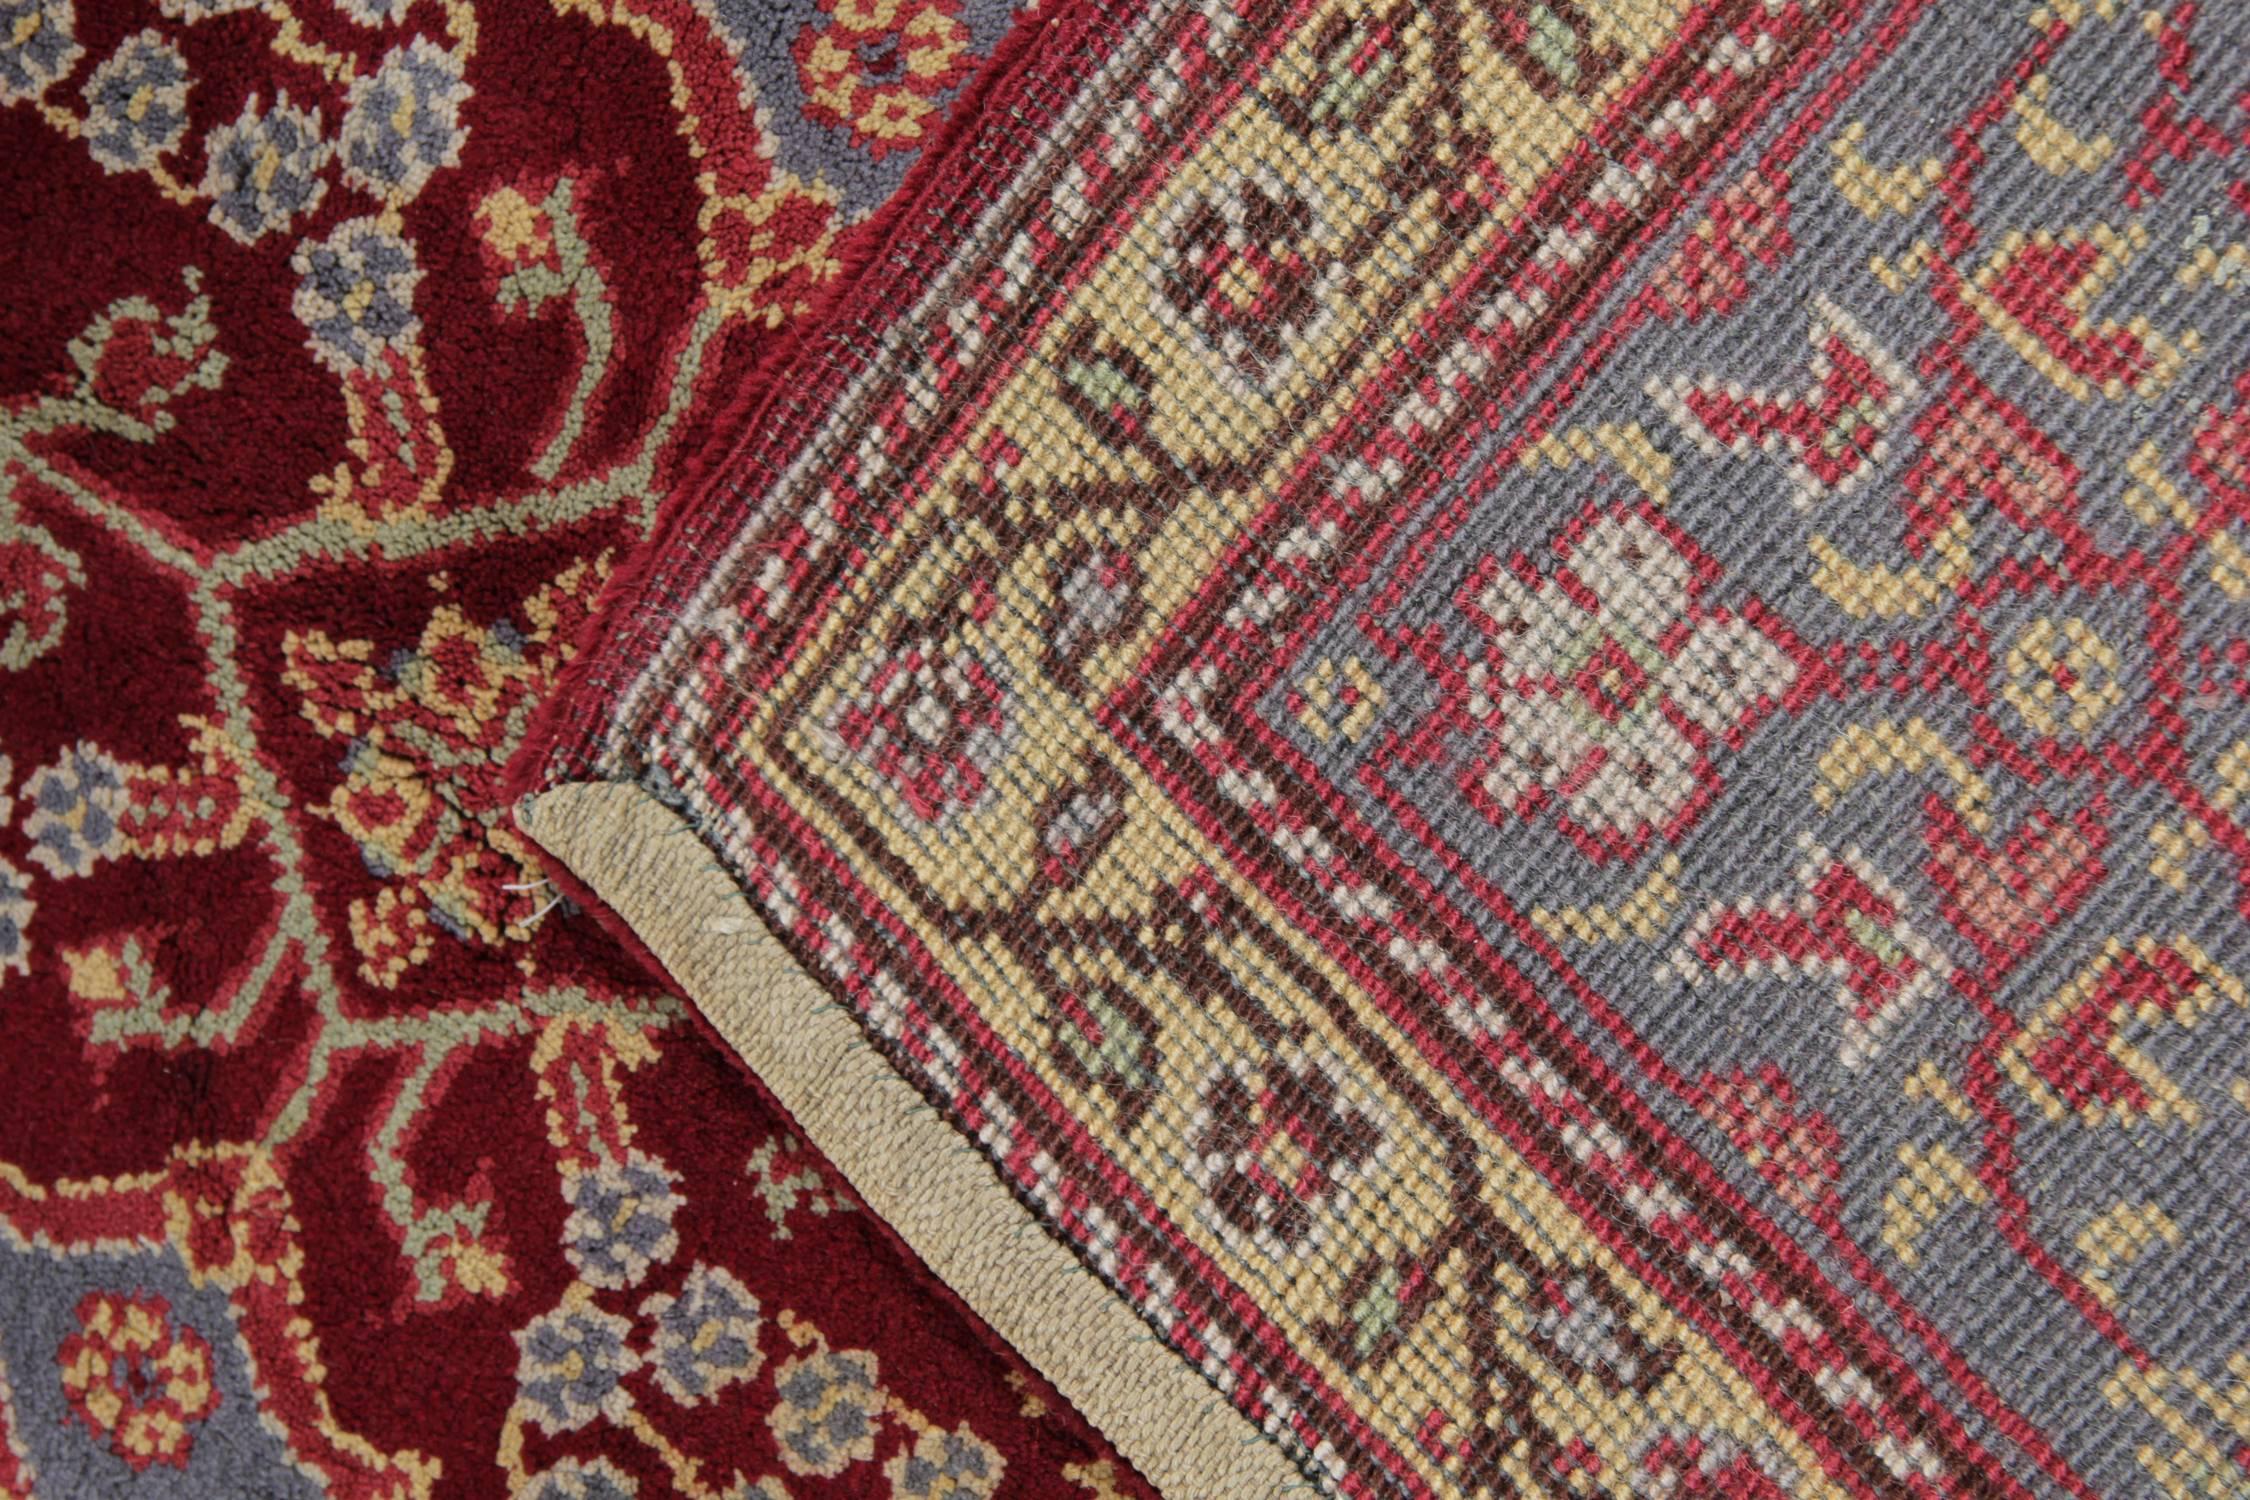 Late 19th Century Handmade Carpet Rare Antique Rugs, English Ax Minster Art Deco Rug For Sale